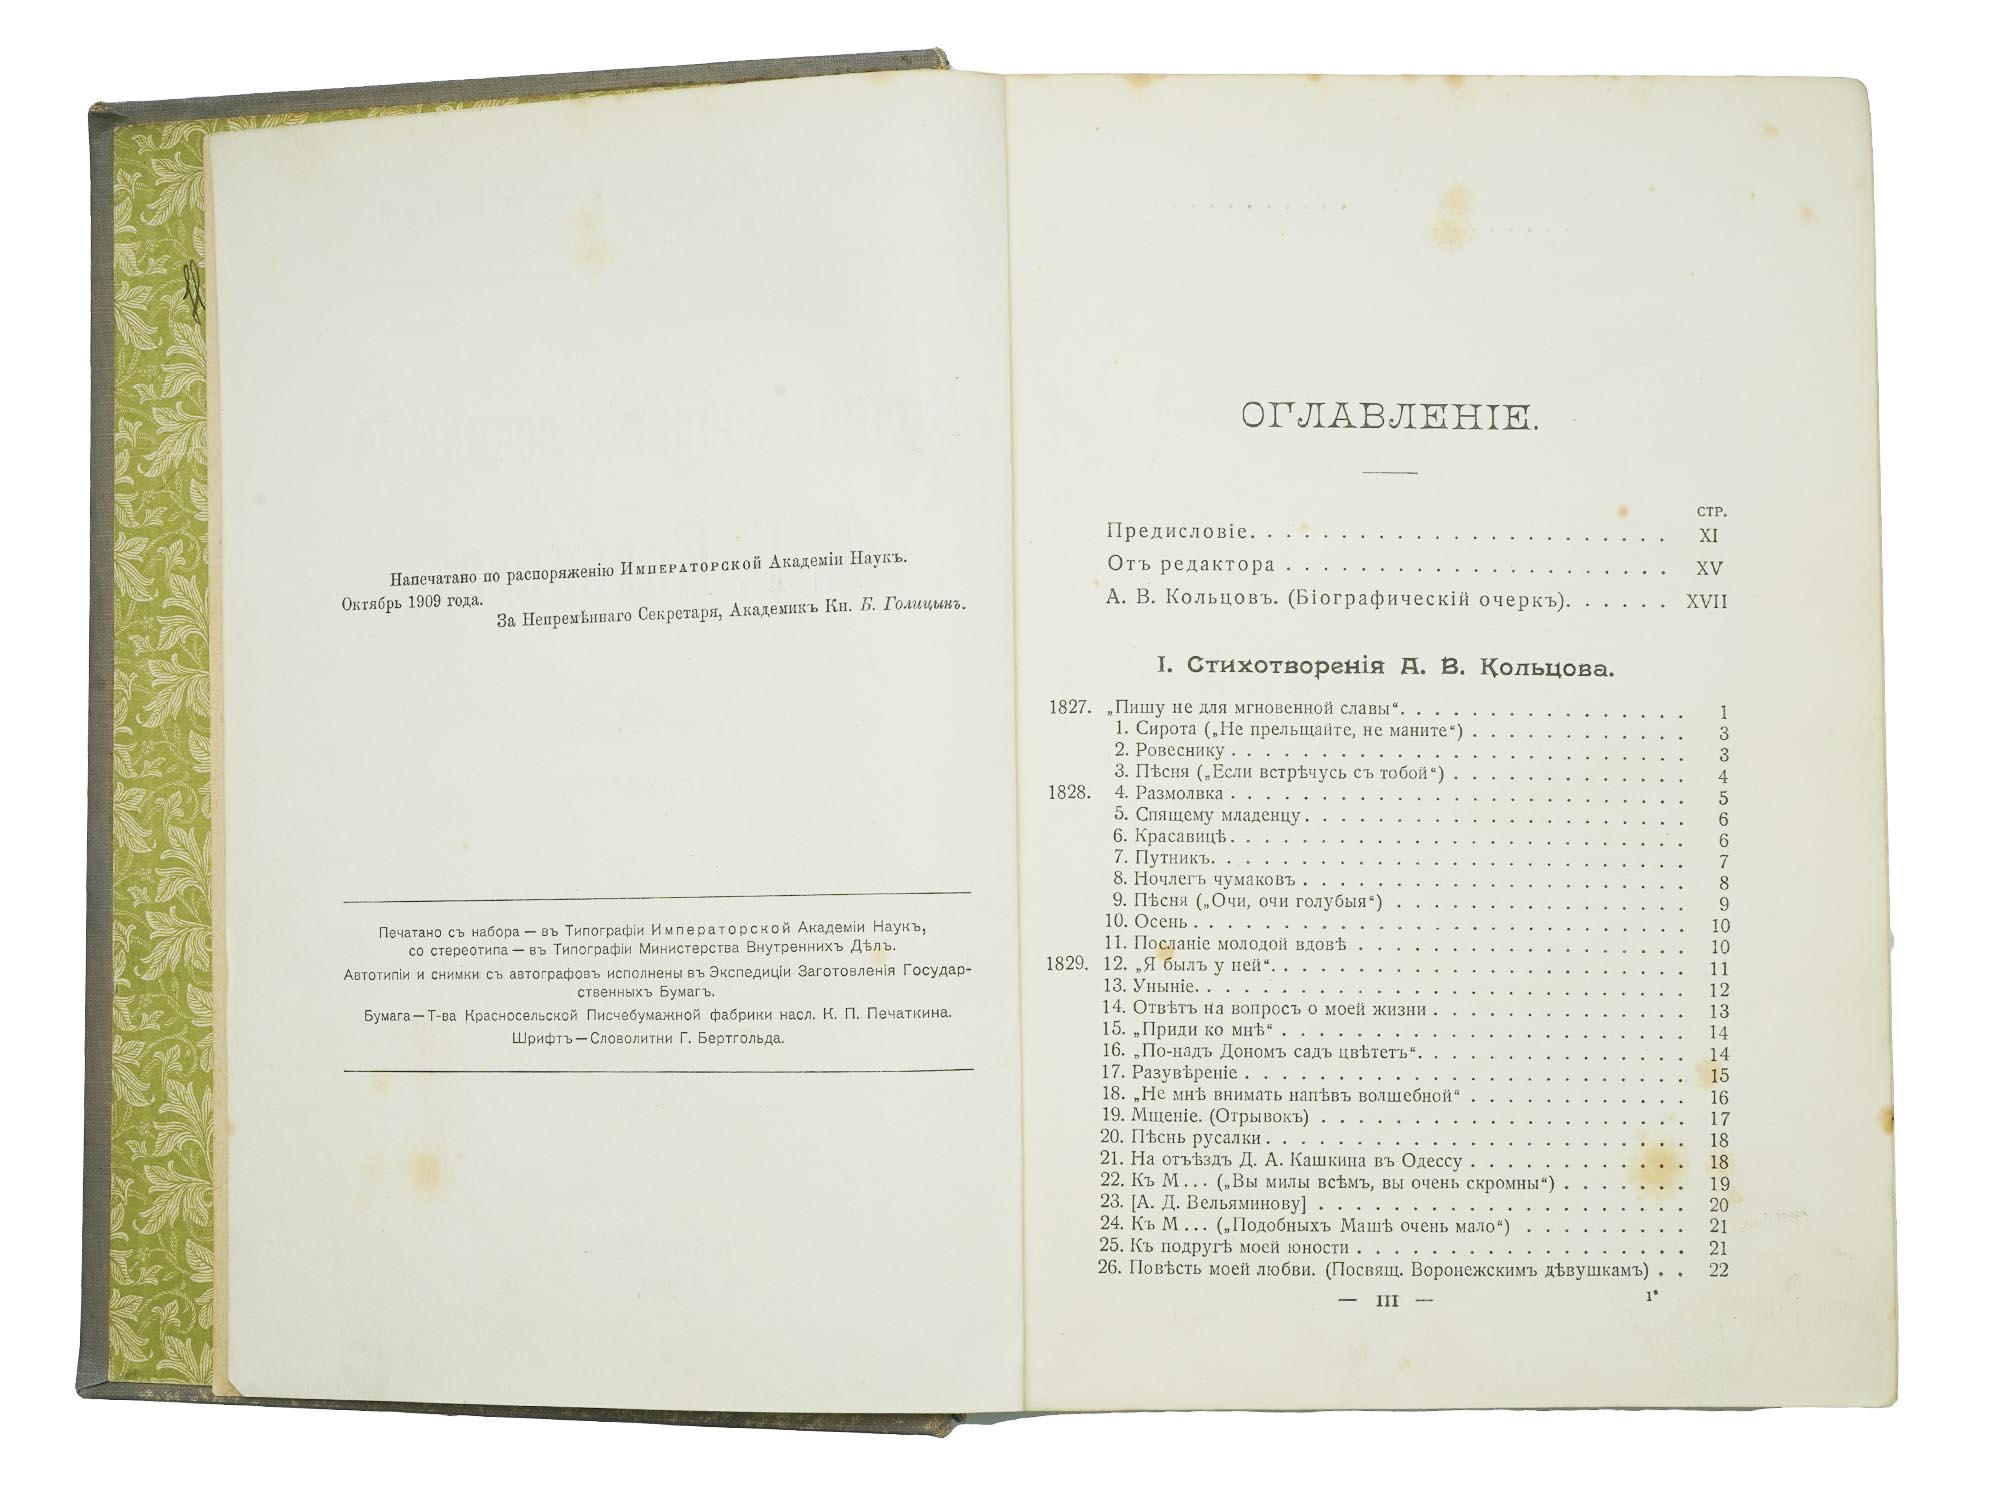 1909 COMPLETE WORKS OF ALEKSEY KOLTSOV VOLUME I PIC-4